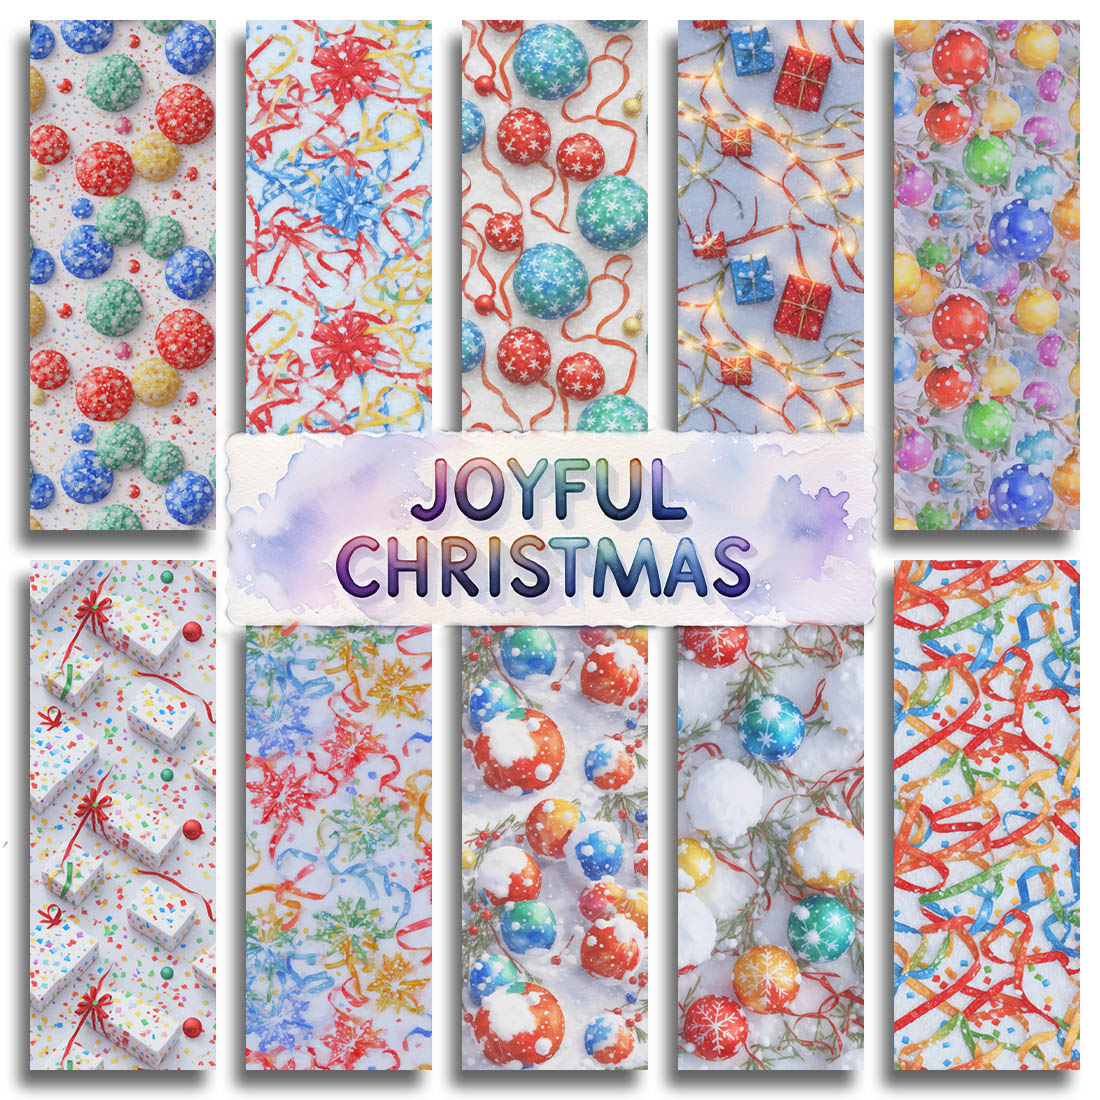 Joyful Christmas: Seamless Patterns cover image.